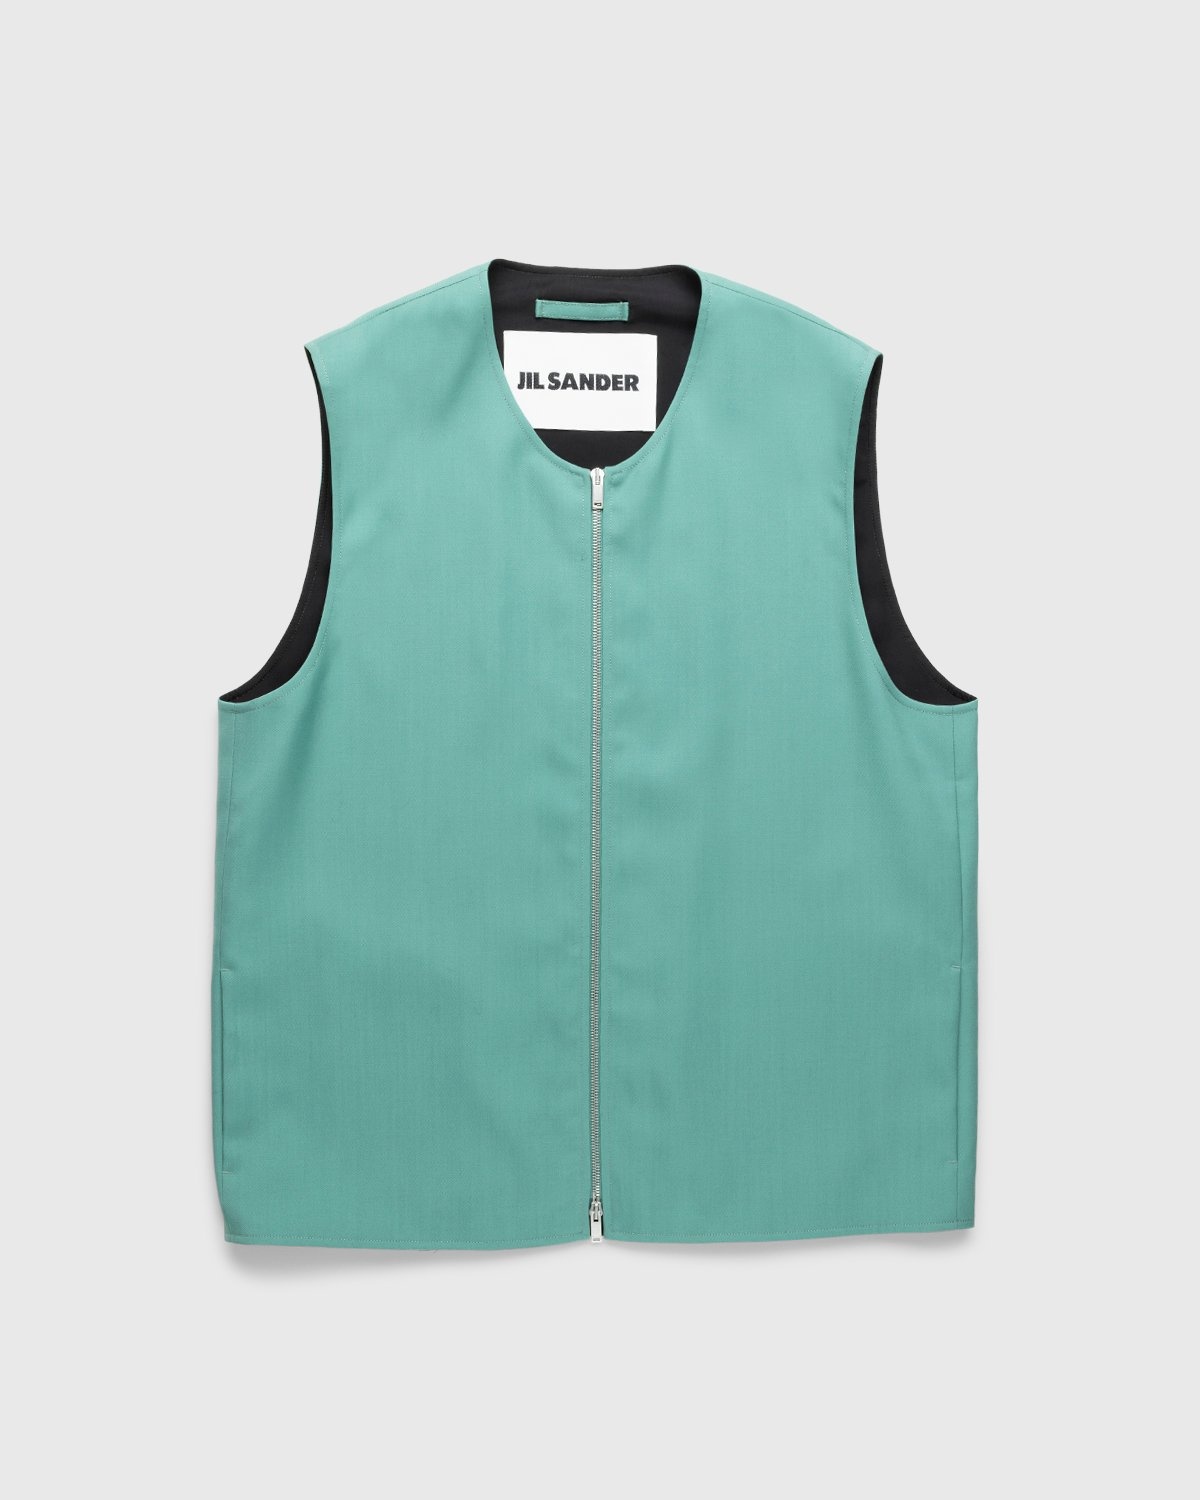 Jil Sander – Vest Bright Green - Outerwear - Green - Image 1